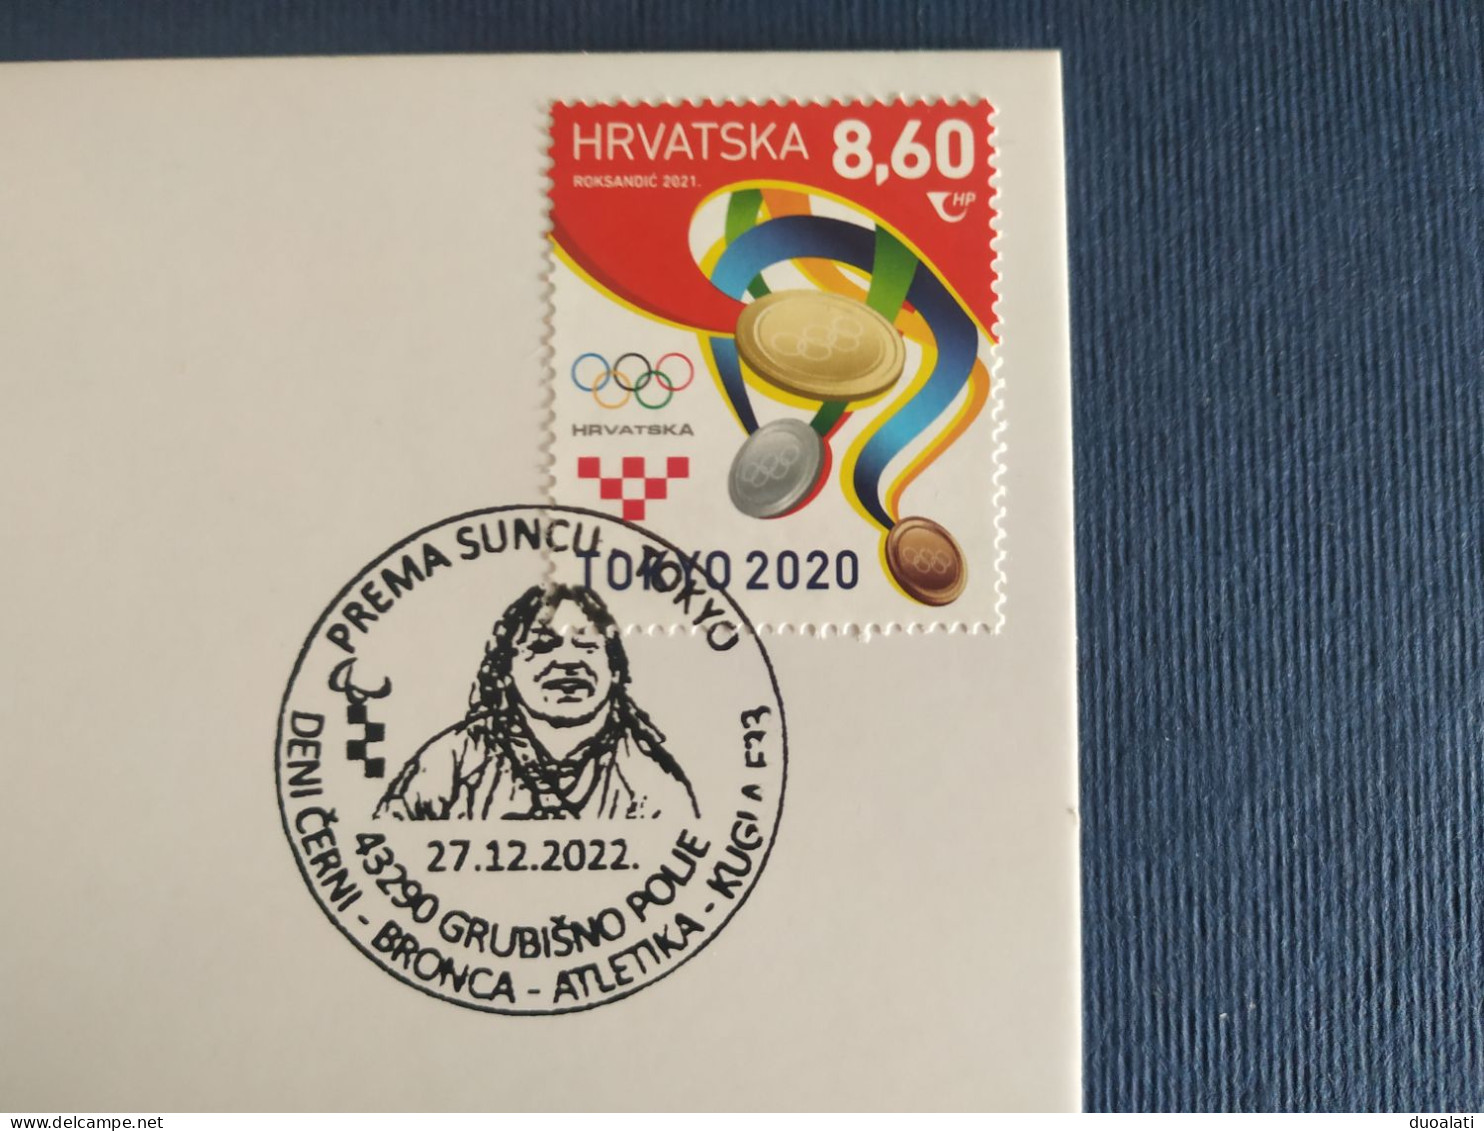 Croatia 2022 Paralympic Games Tokyo 2020 Deni Černi Shot Put F33 Athletics Bronze Medal Stationery & Postmark - Summer 2020: Tokyo